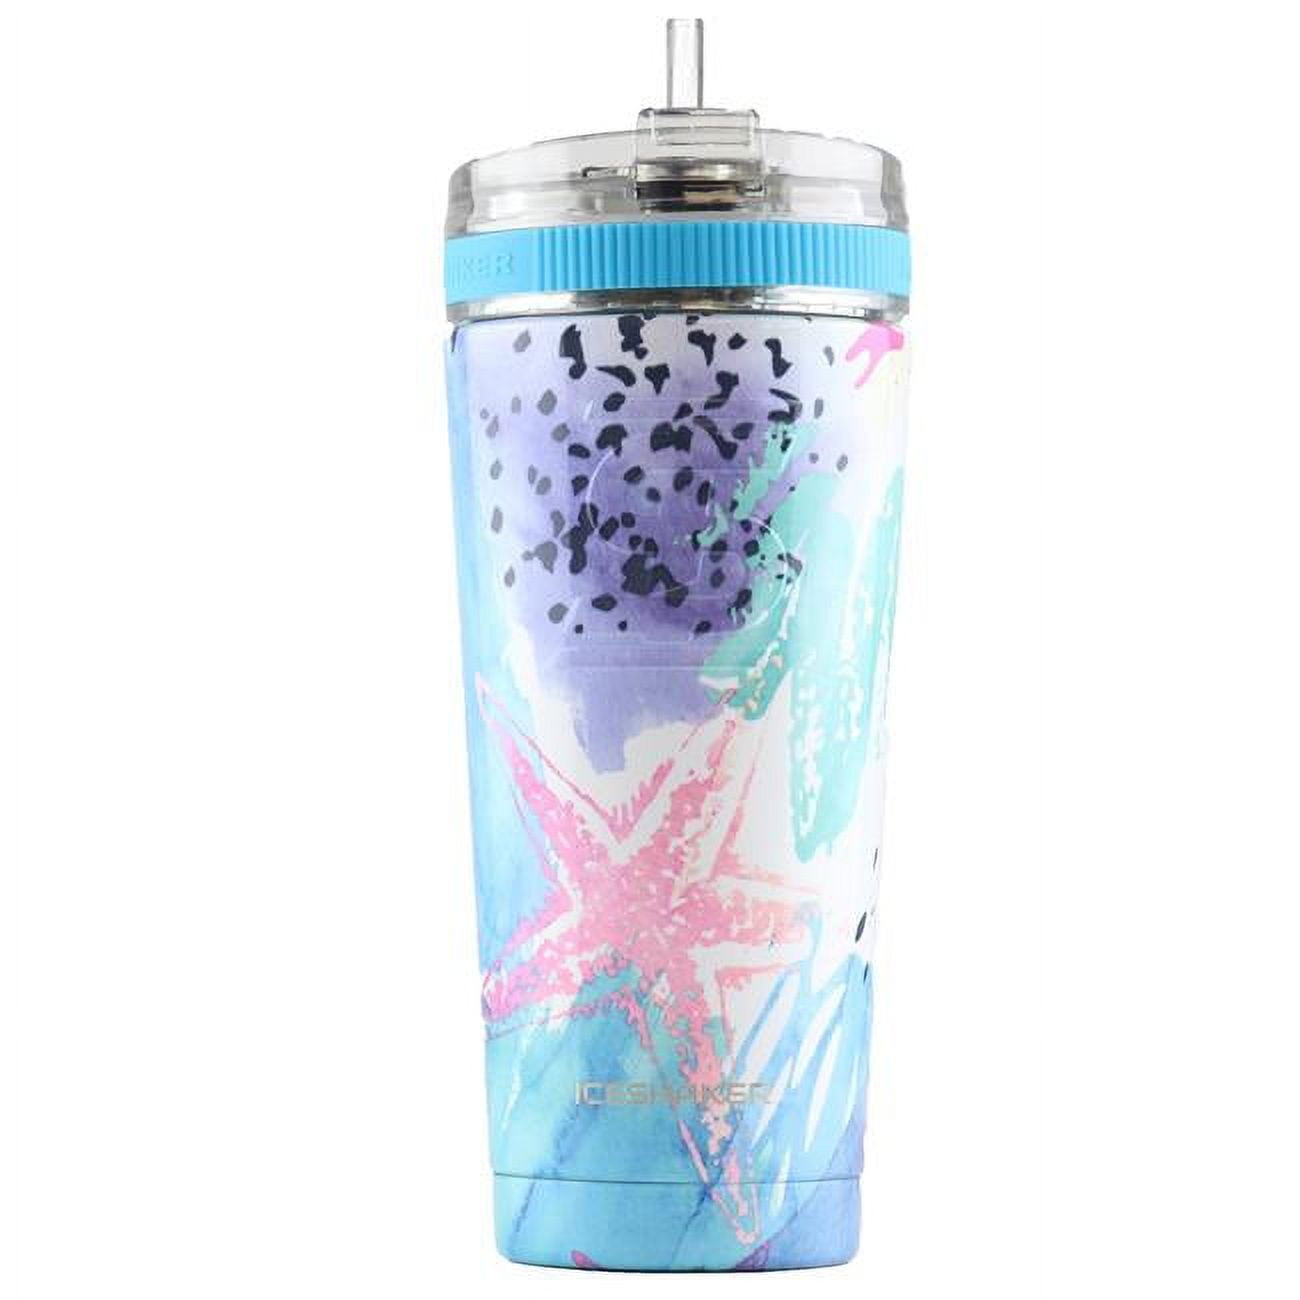 Ice Shaker 26FlexPink 26 oz Bottle with Flex Lid Pink